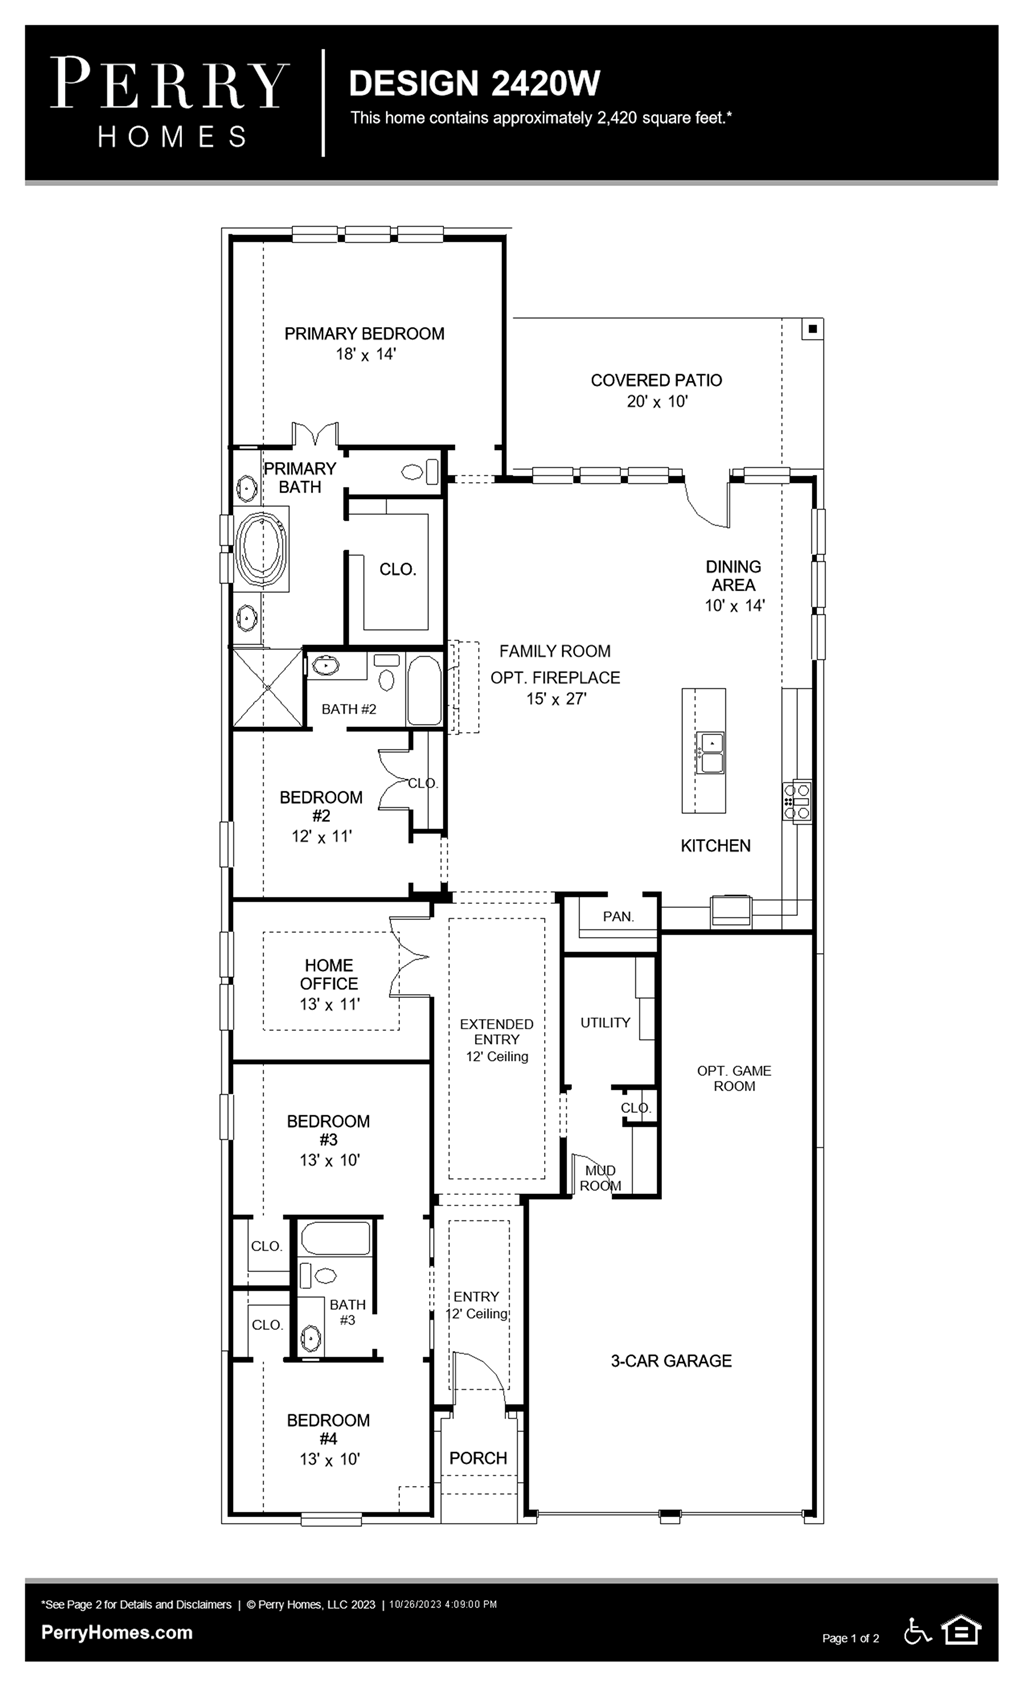 Floor Plan for 2420W